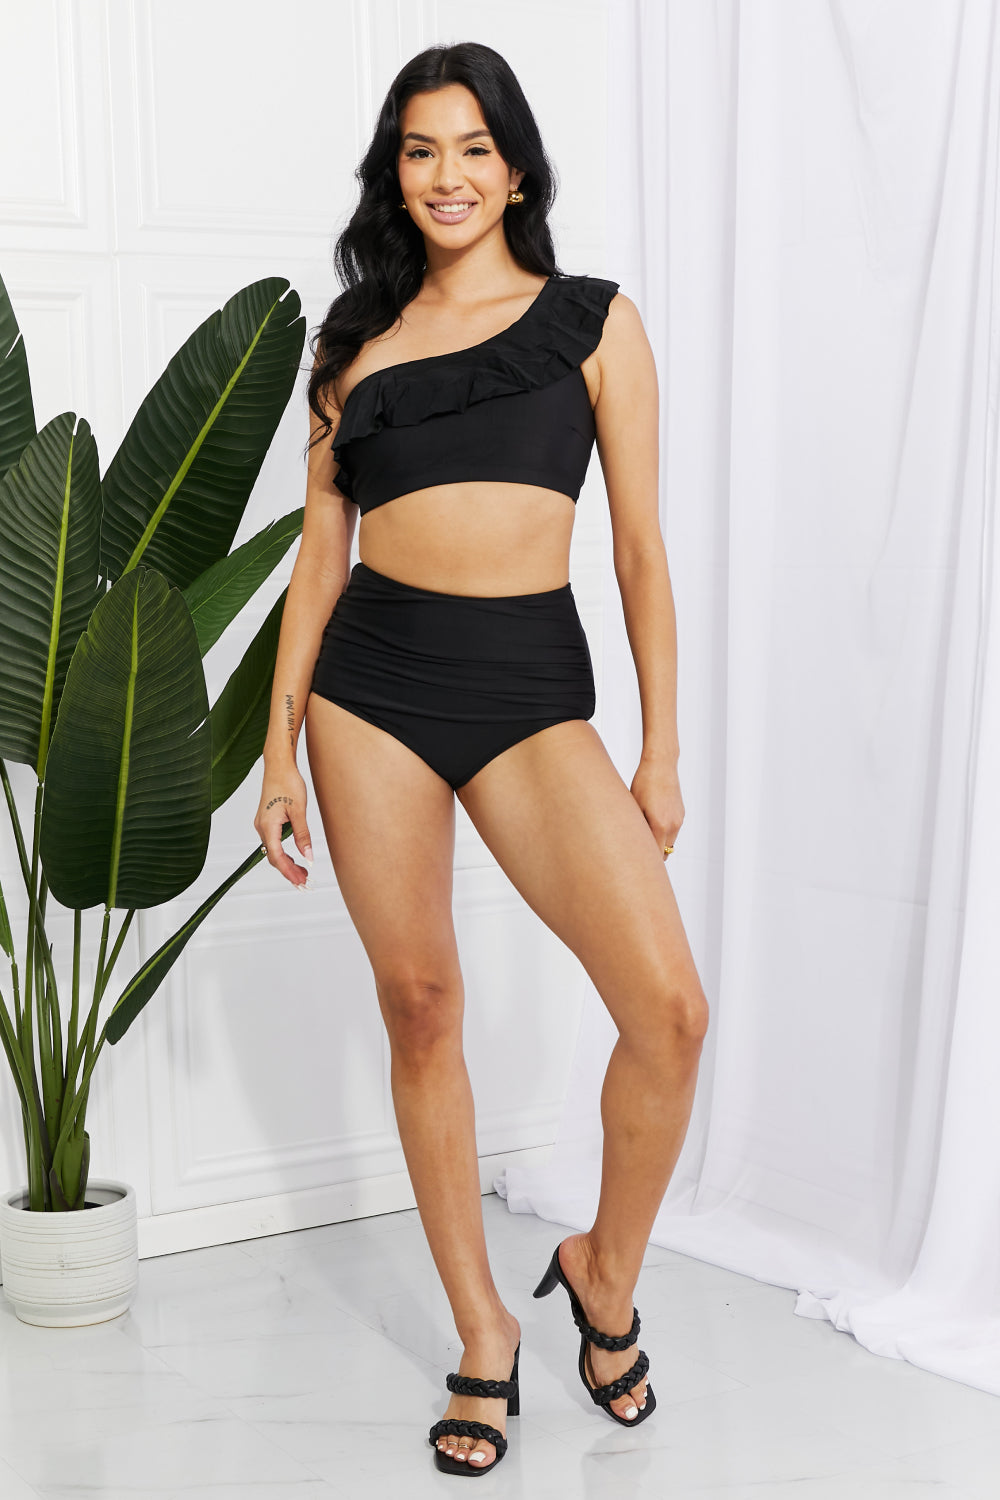 Marina West Swim Seaside Romance Ruffle One-Shoulder Bikini in Black-Swimwear-Trendsi-JipsiJunk